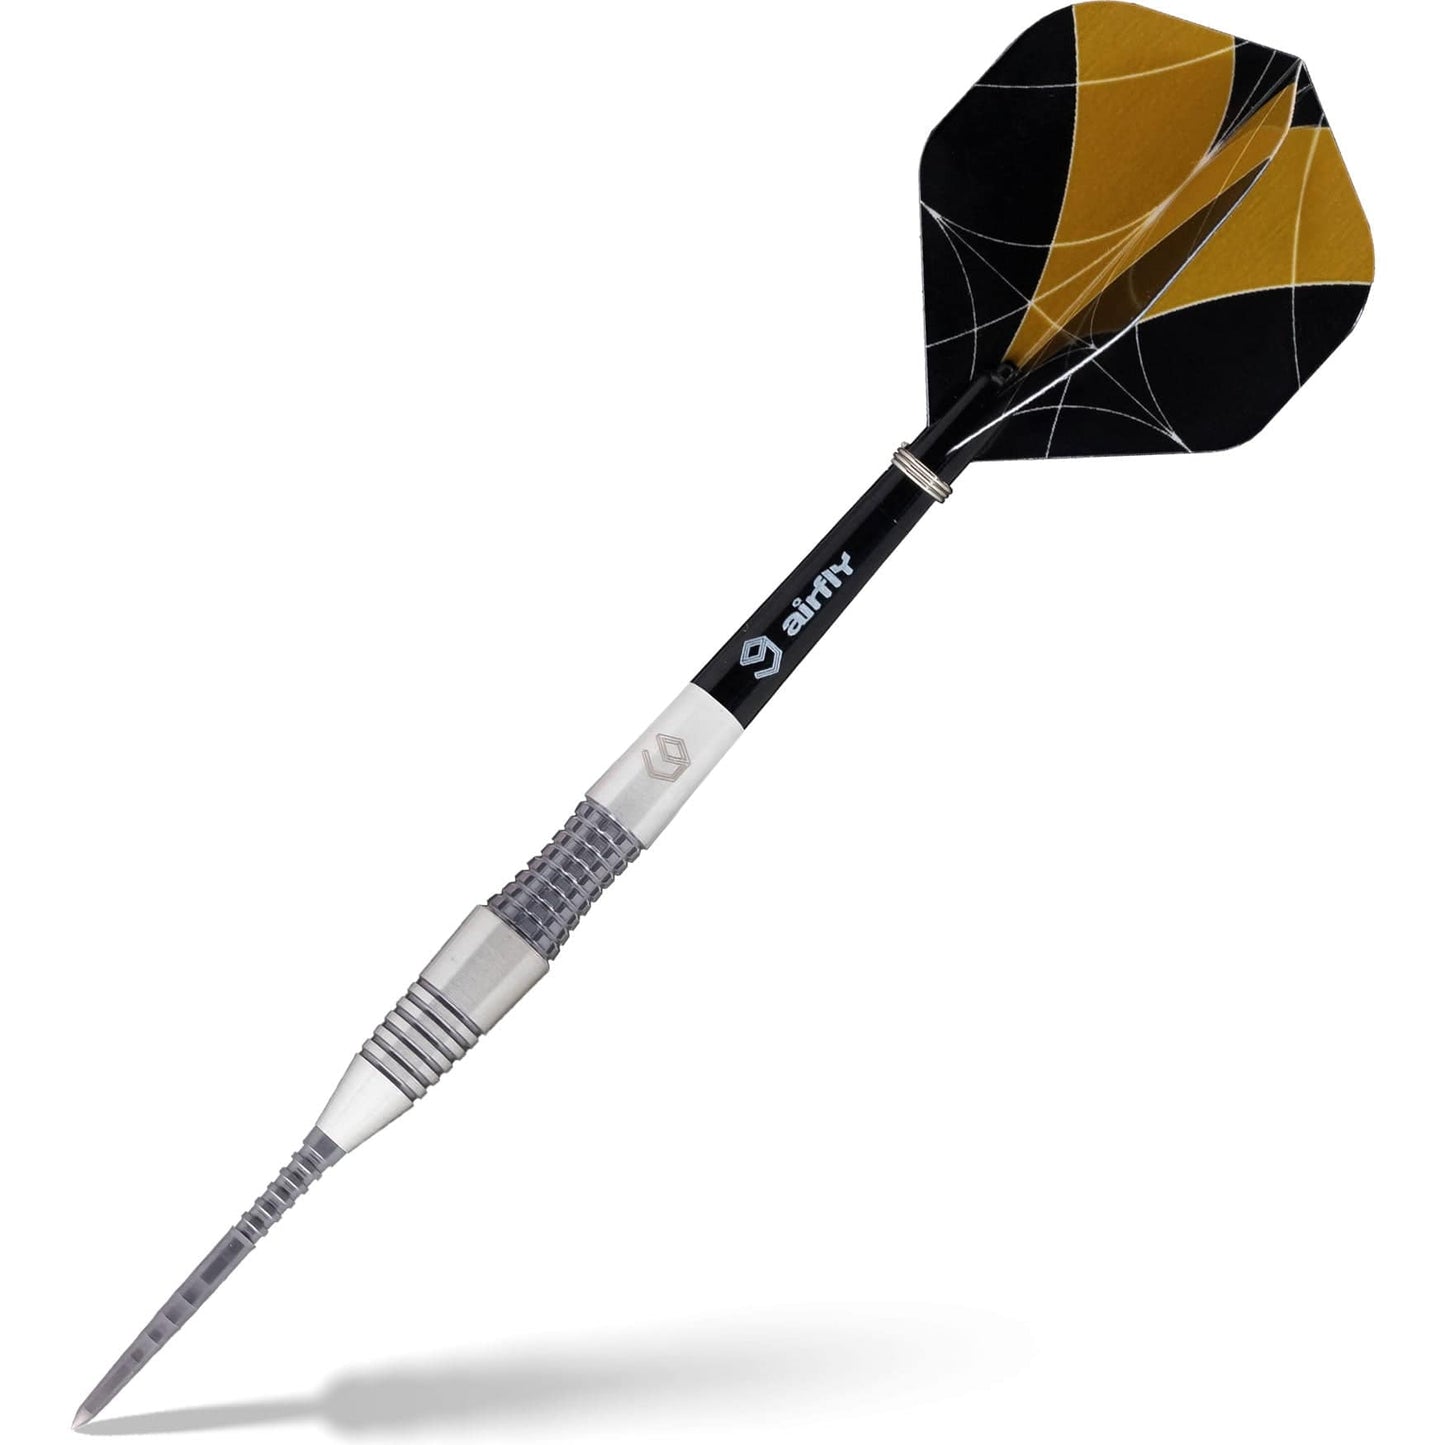 Caliburn Matrix II Darts - Steel Tip - 90% - M2 - Black